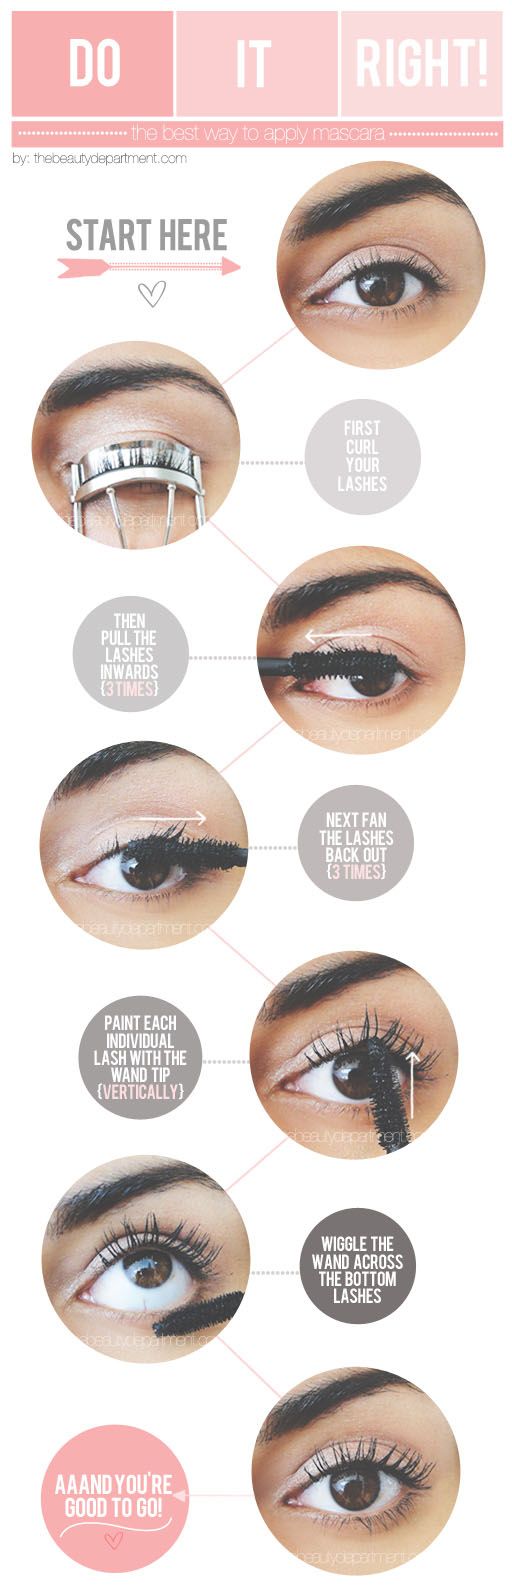 på den anden side, Studerende kollektion 10 eye makeup tutorials from Pinterest that'll turn you into a beauty PRO